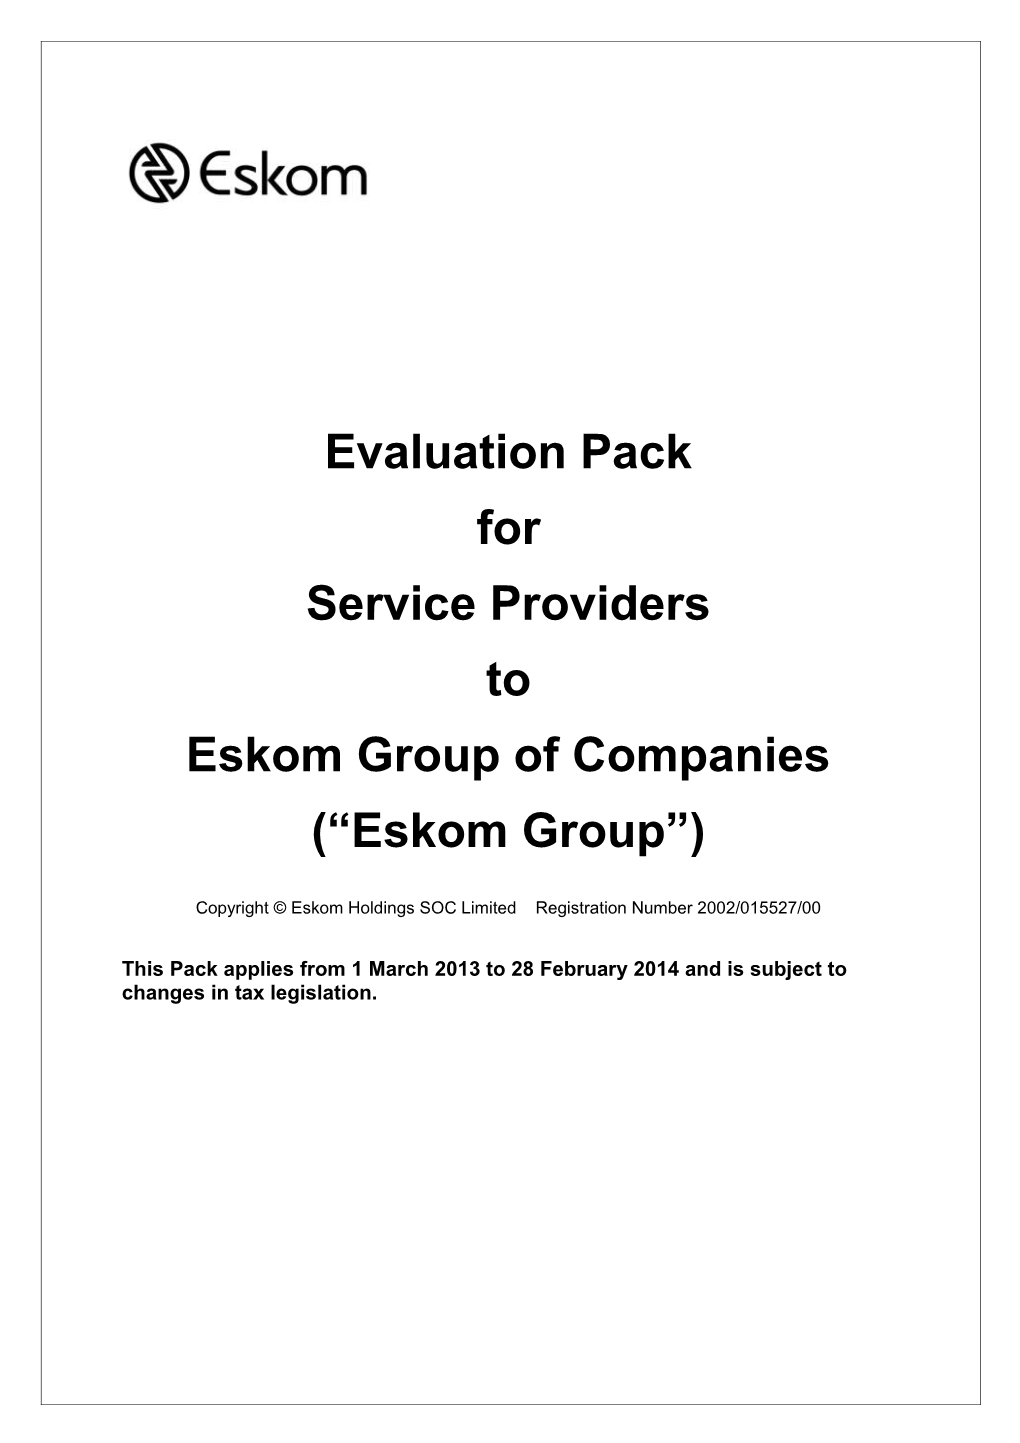 Supplier Evaluation Pack